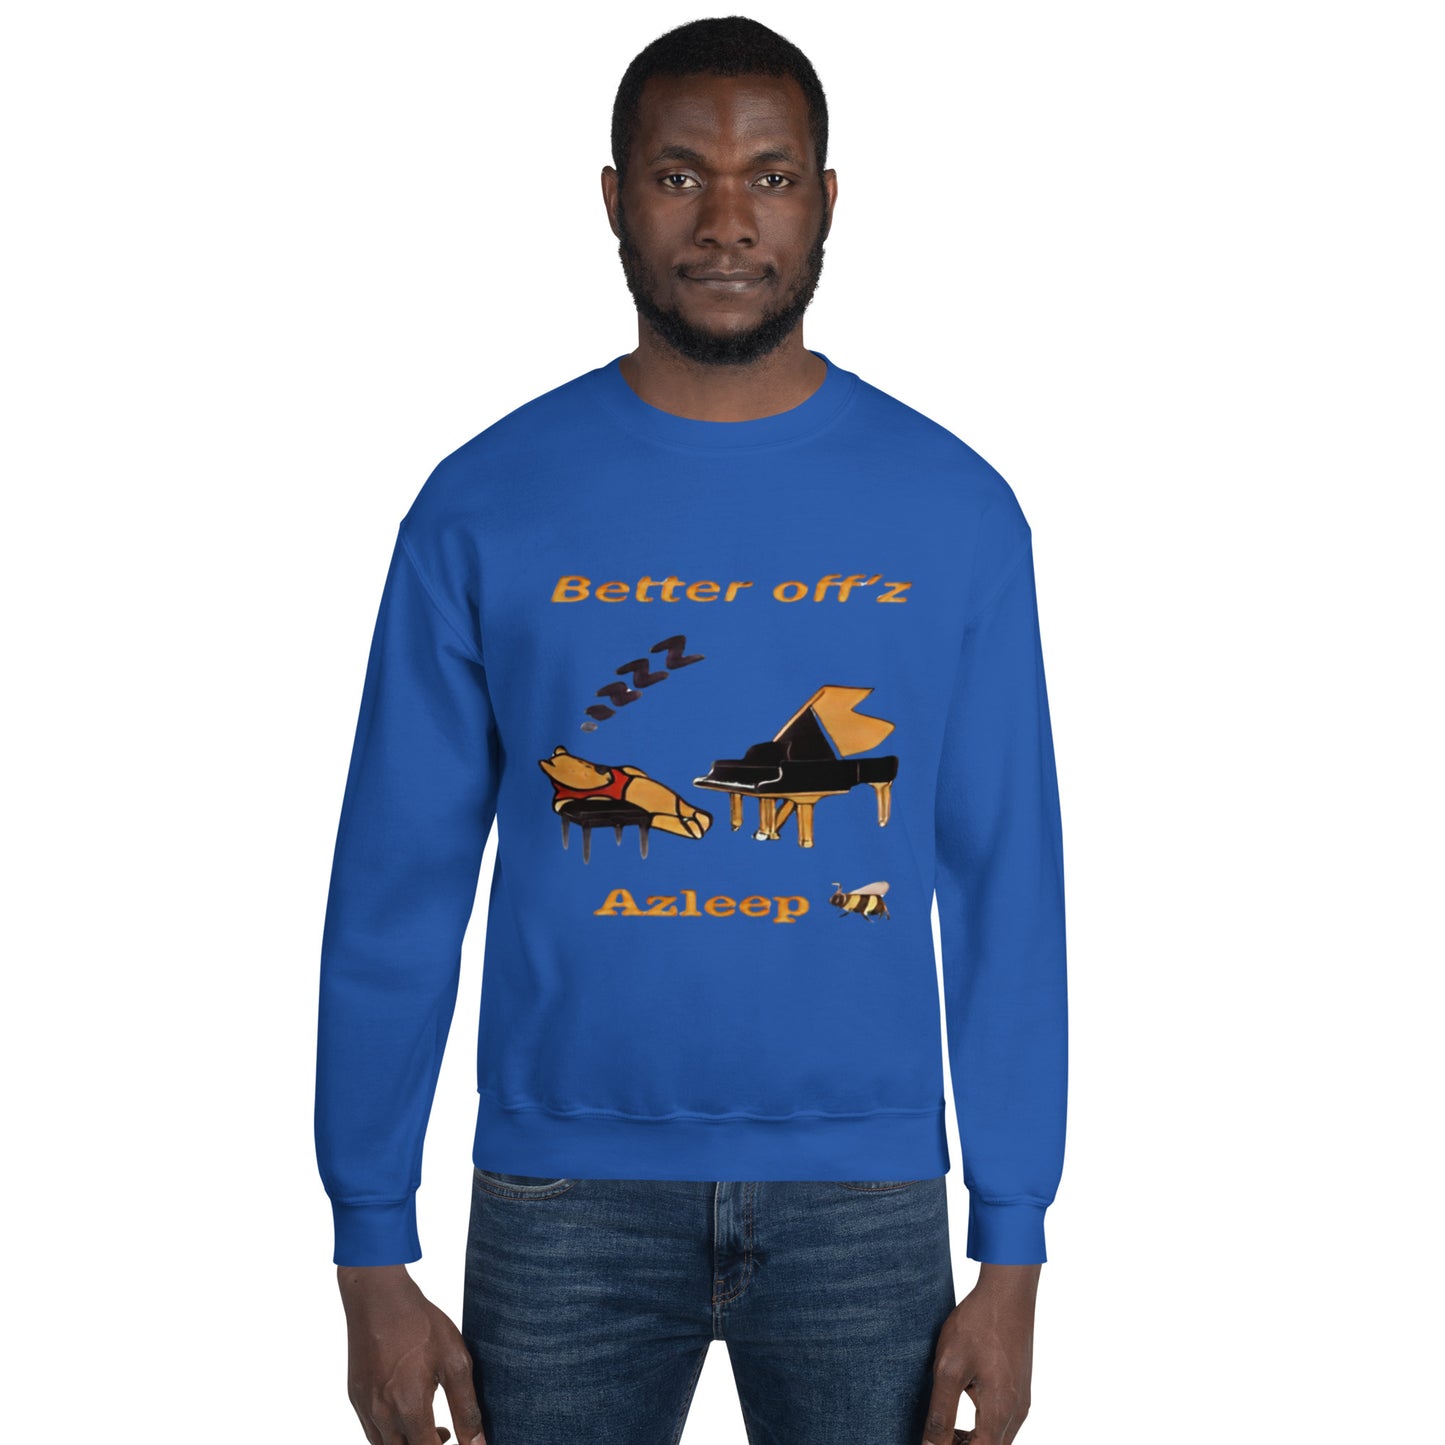 Better off’z azleep Unisex Sweatshirt